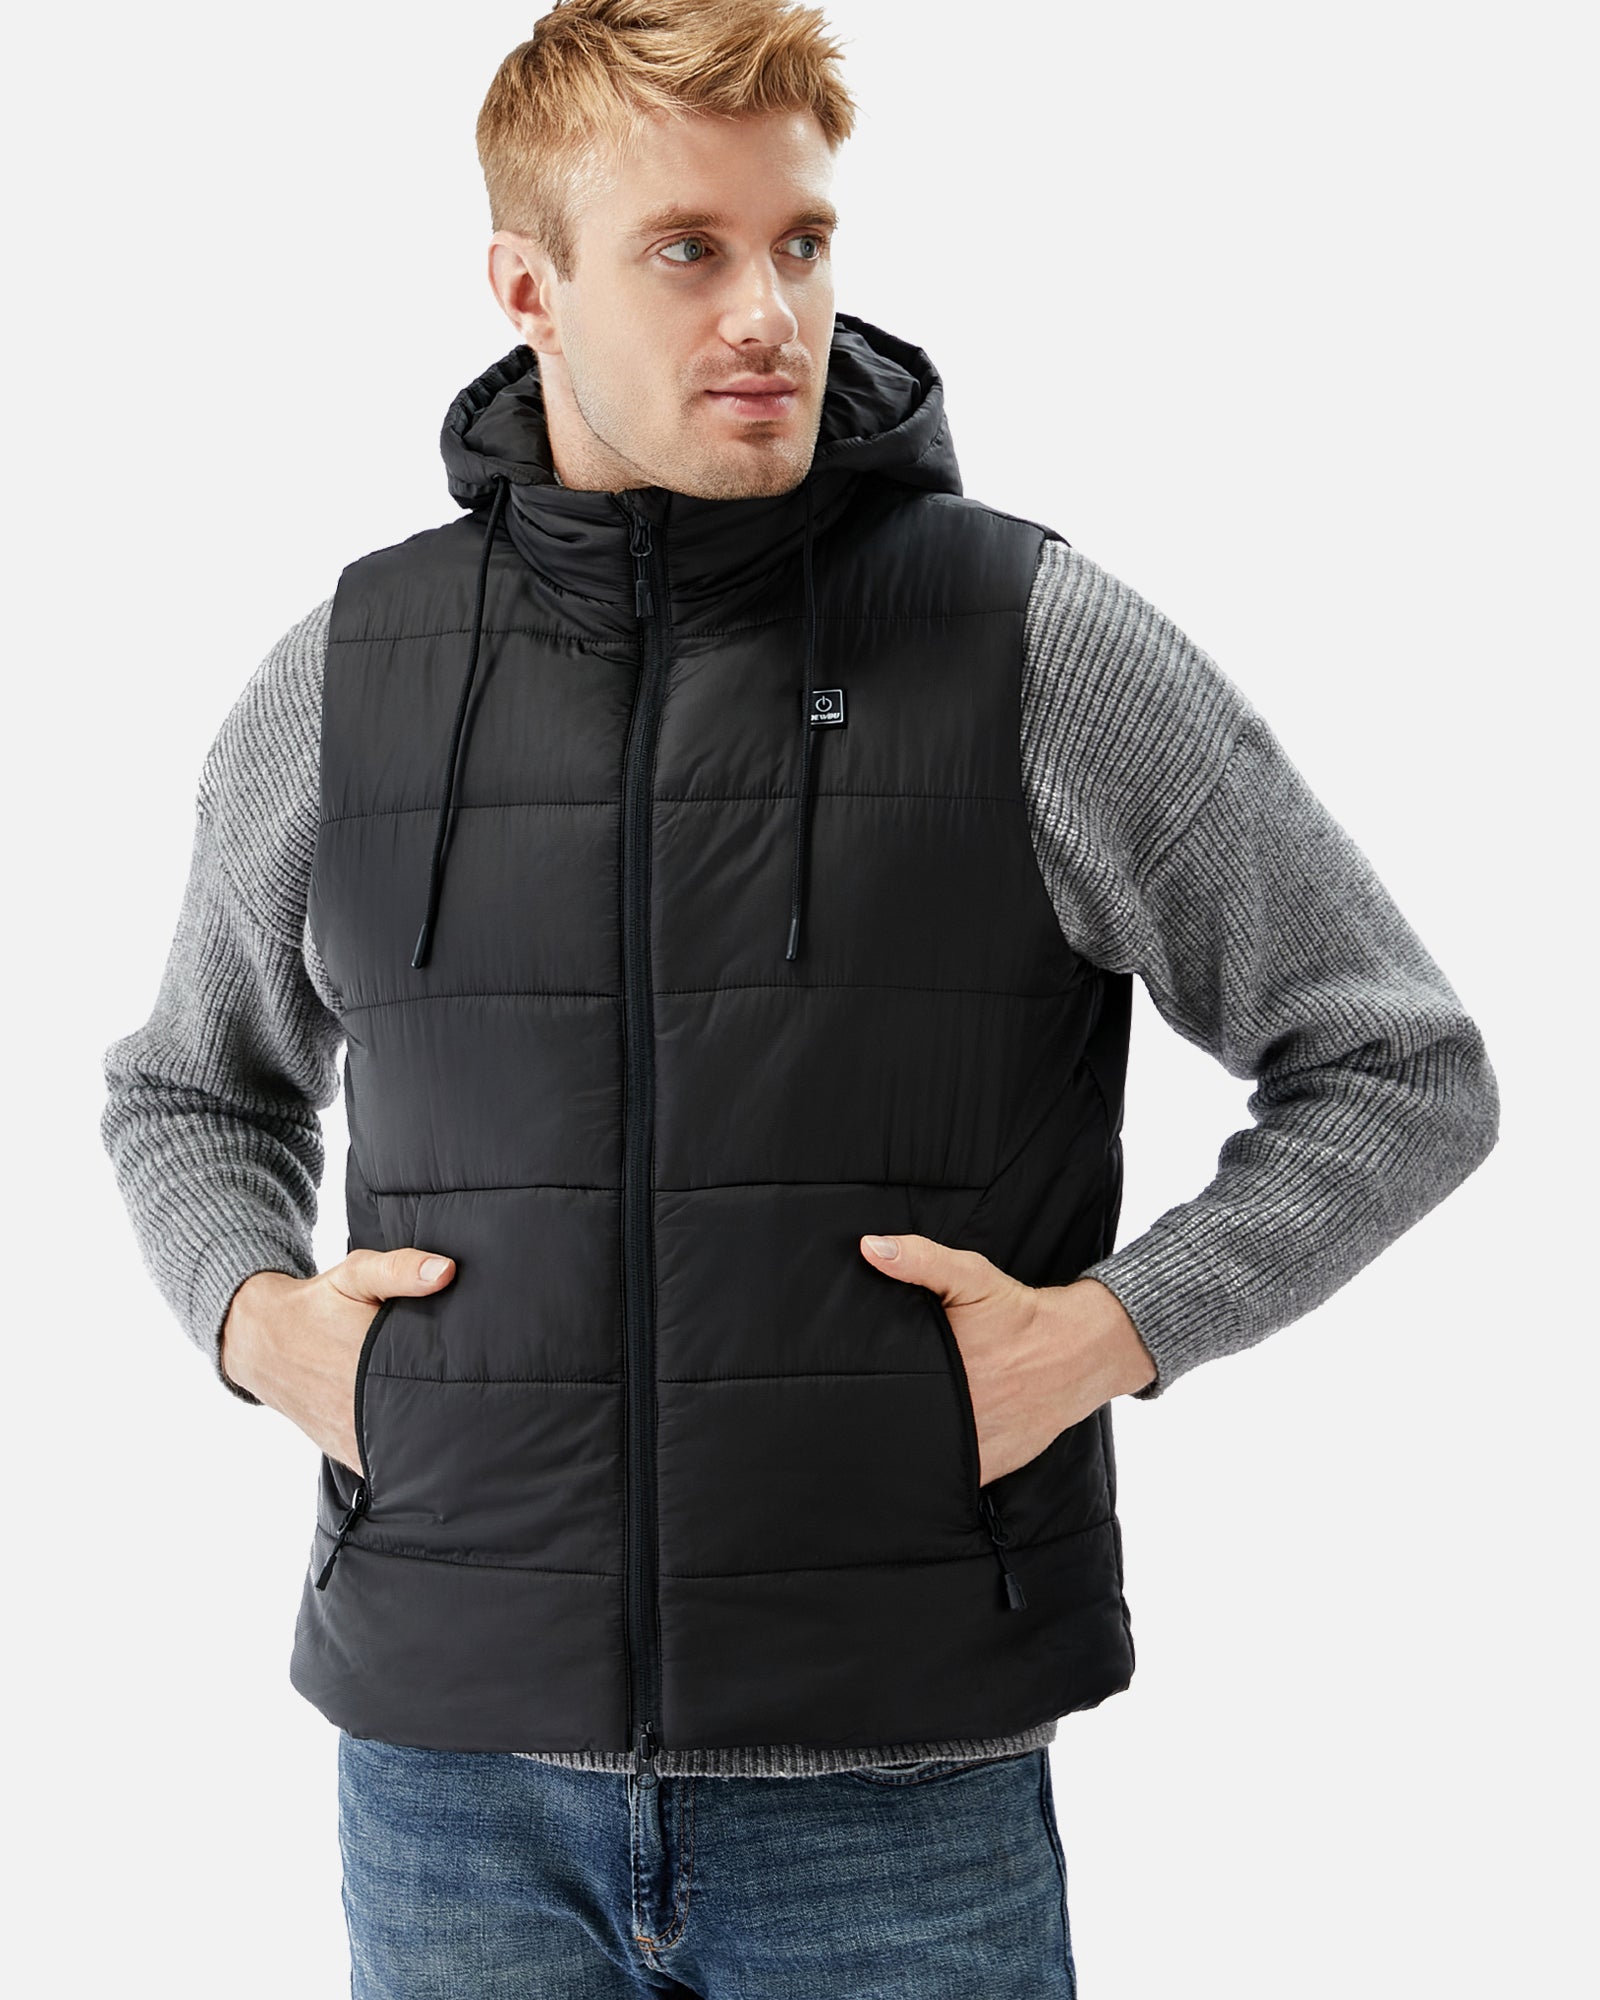 DEWBU® Men's Heated Jacket Detachable Hood With 12V Battery Pack